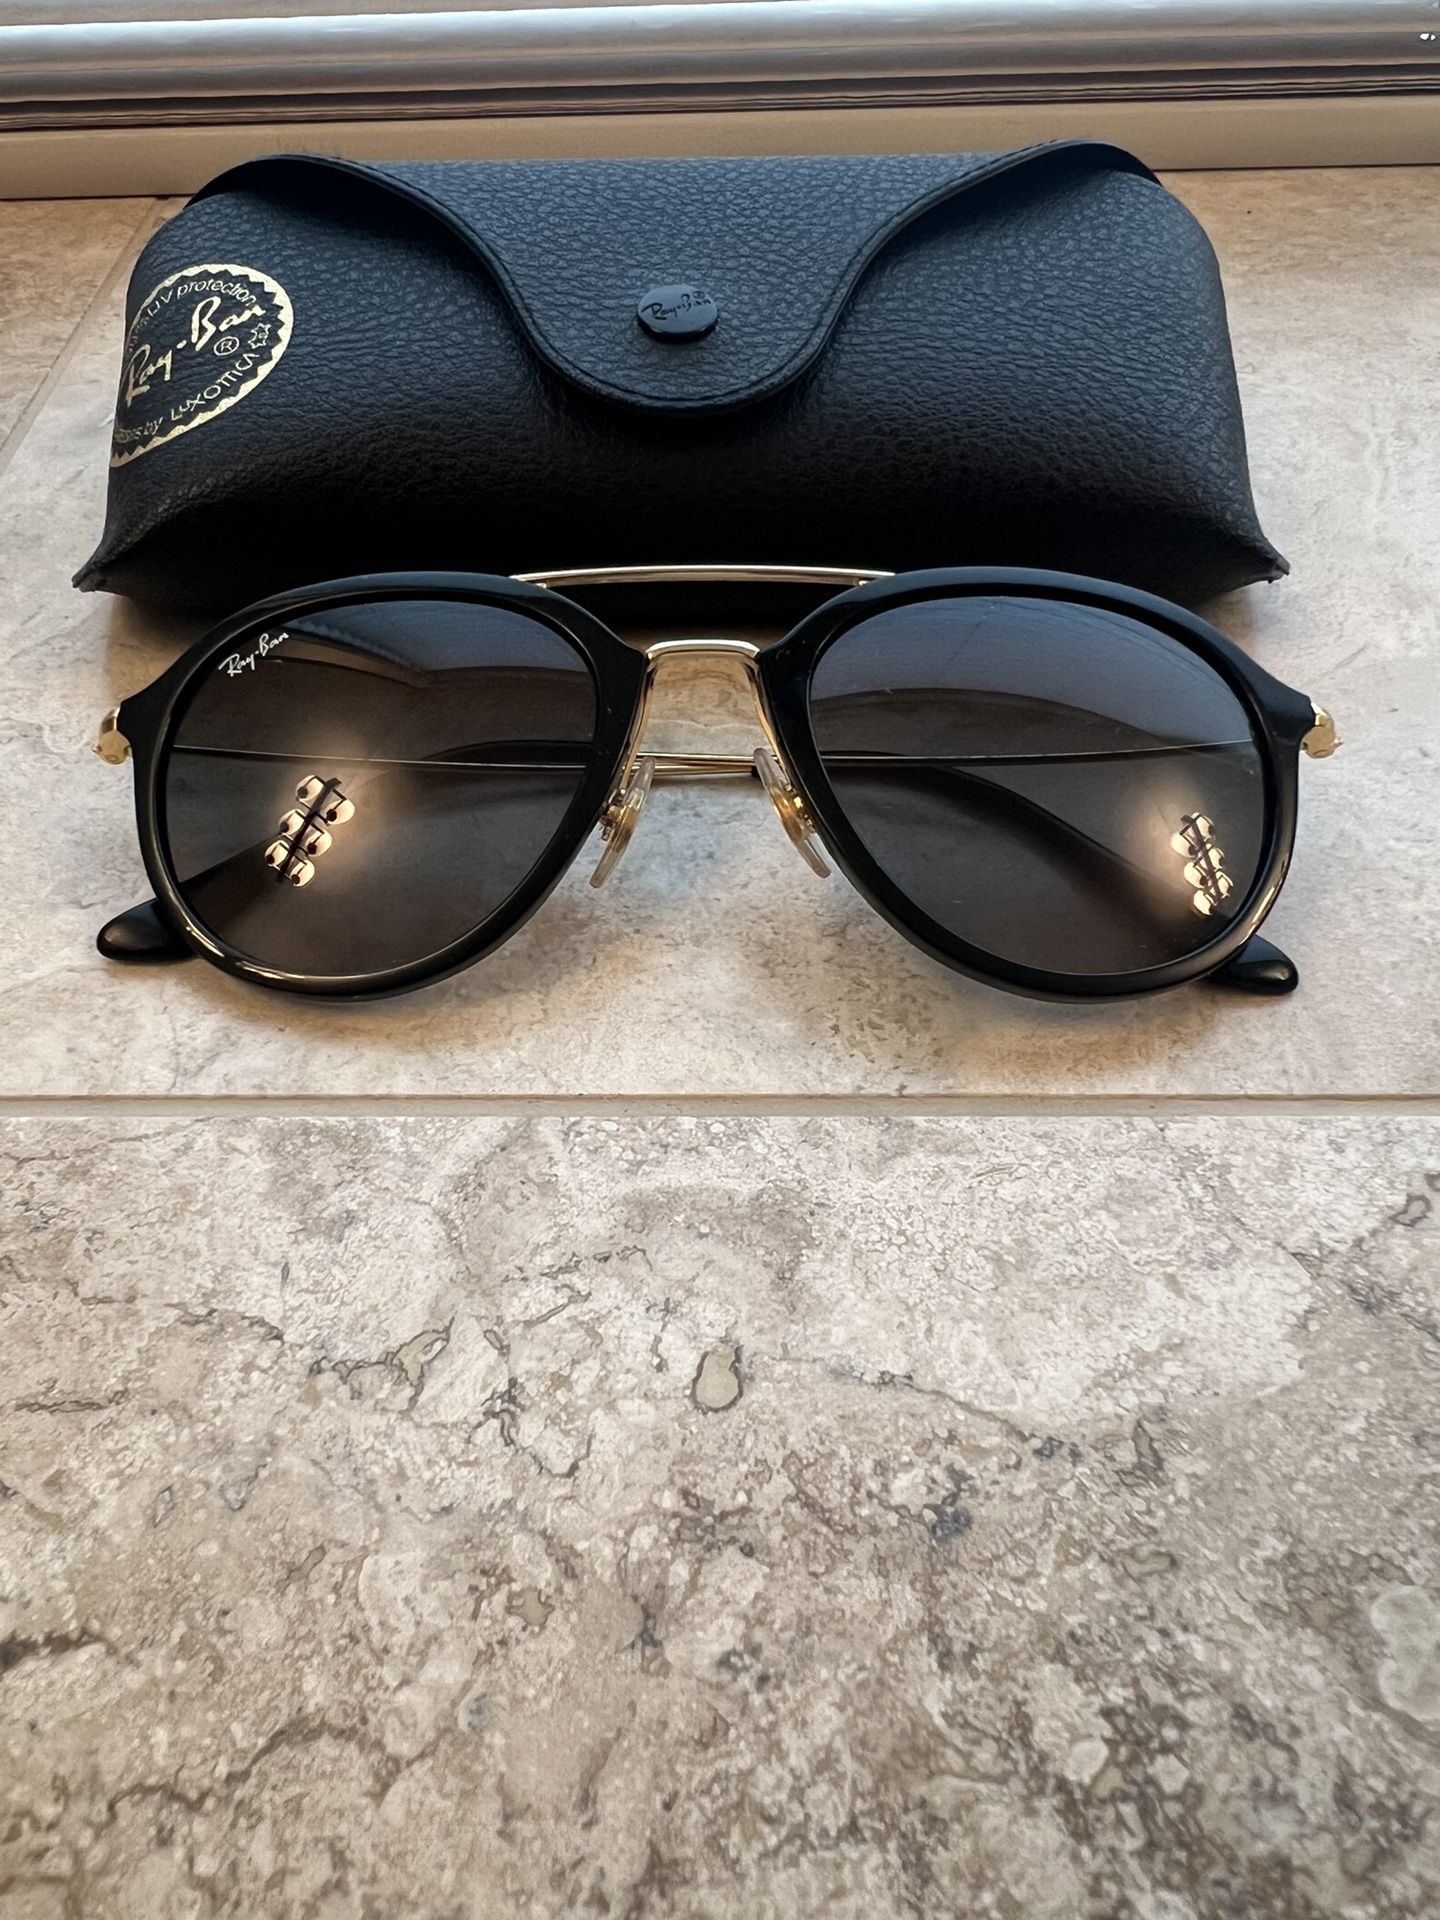 Ray-Ban Sunglasses (RB4253) - $100 OBO